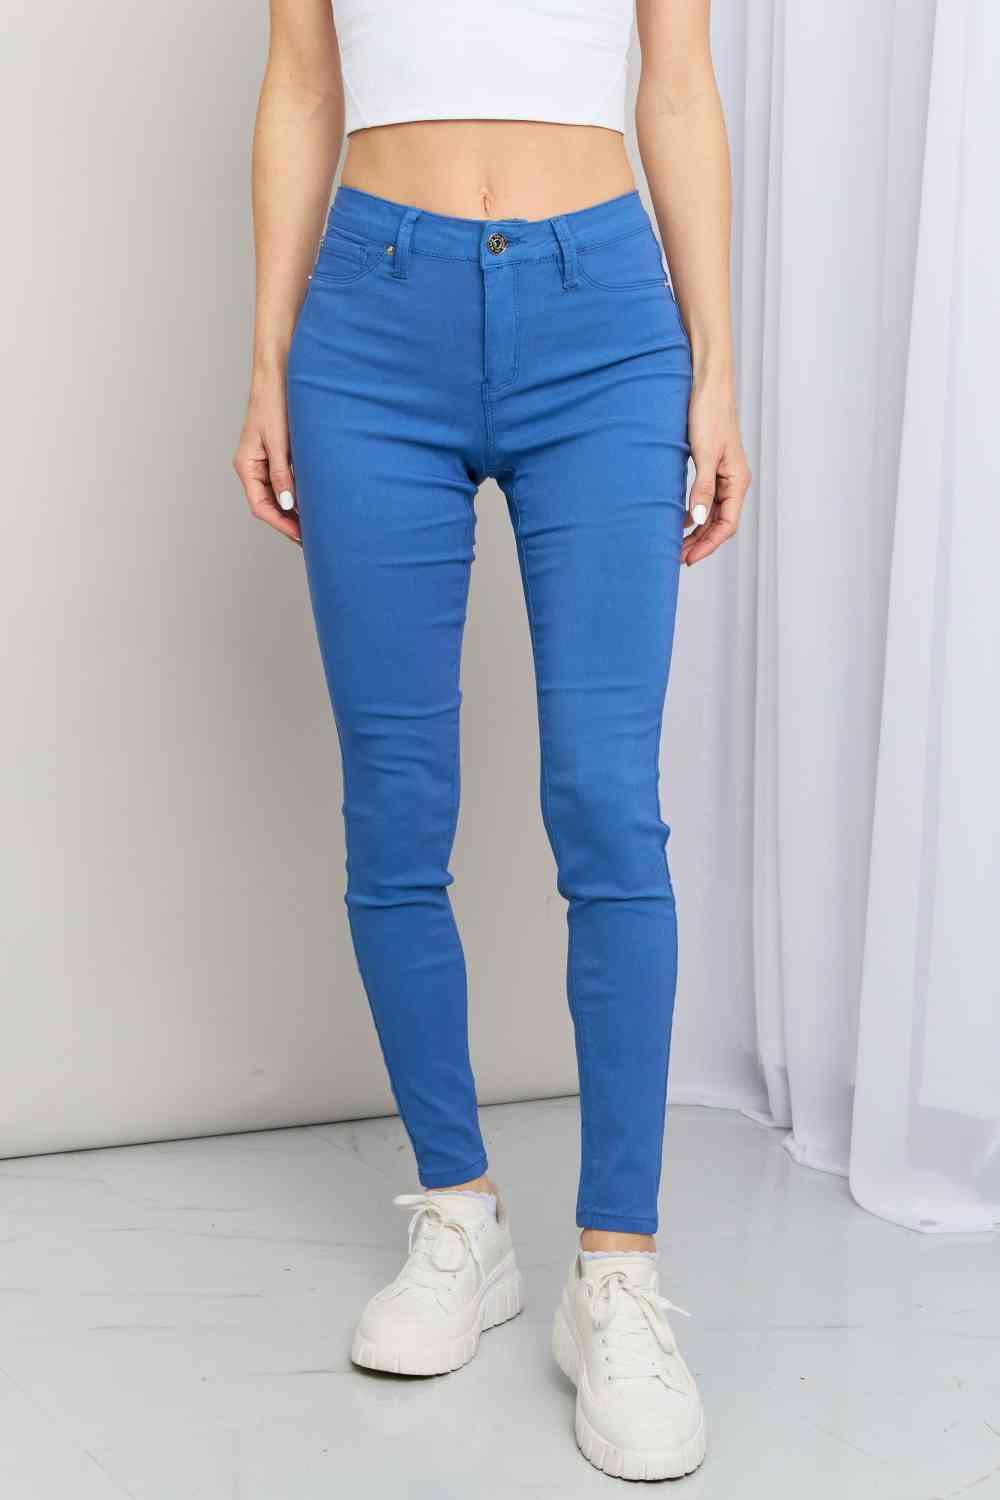 YMI Jeanswear Kate Hyper-Stretch Full Size Mid-Rise Skinny Jeans in Electric Blue - Immenzive